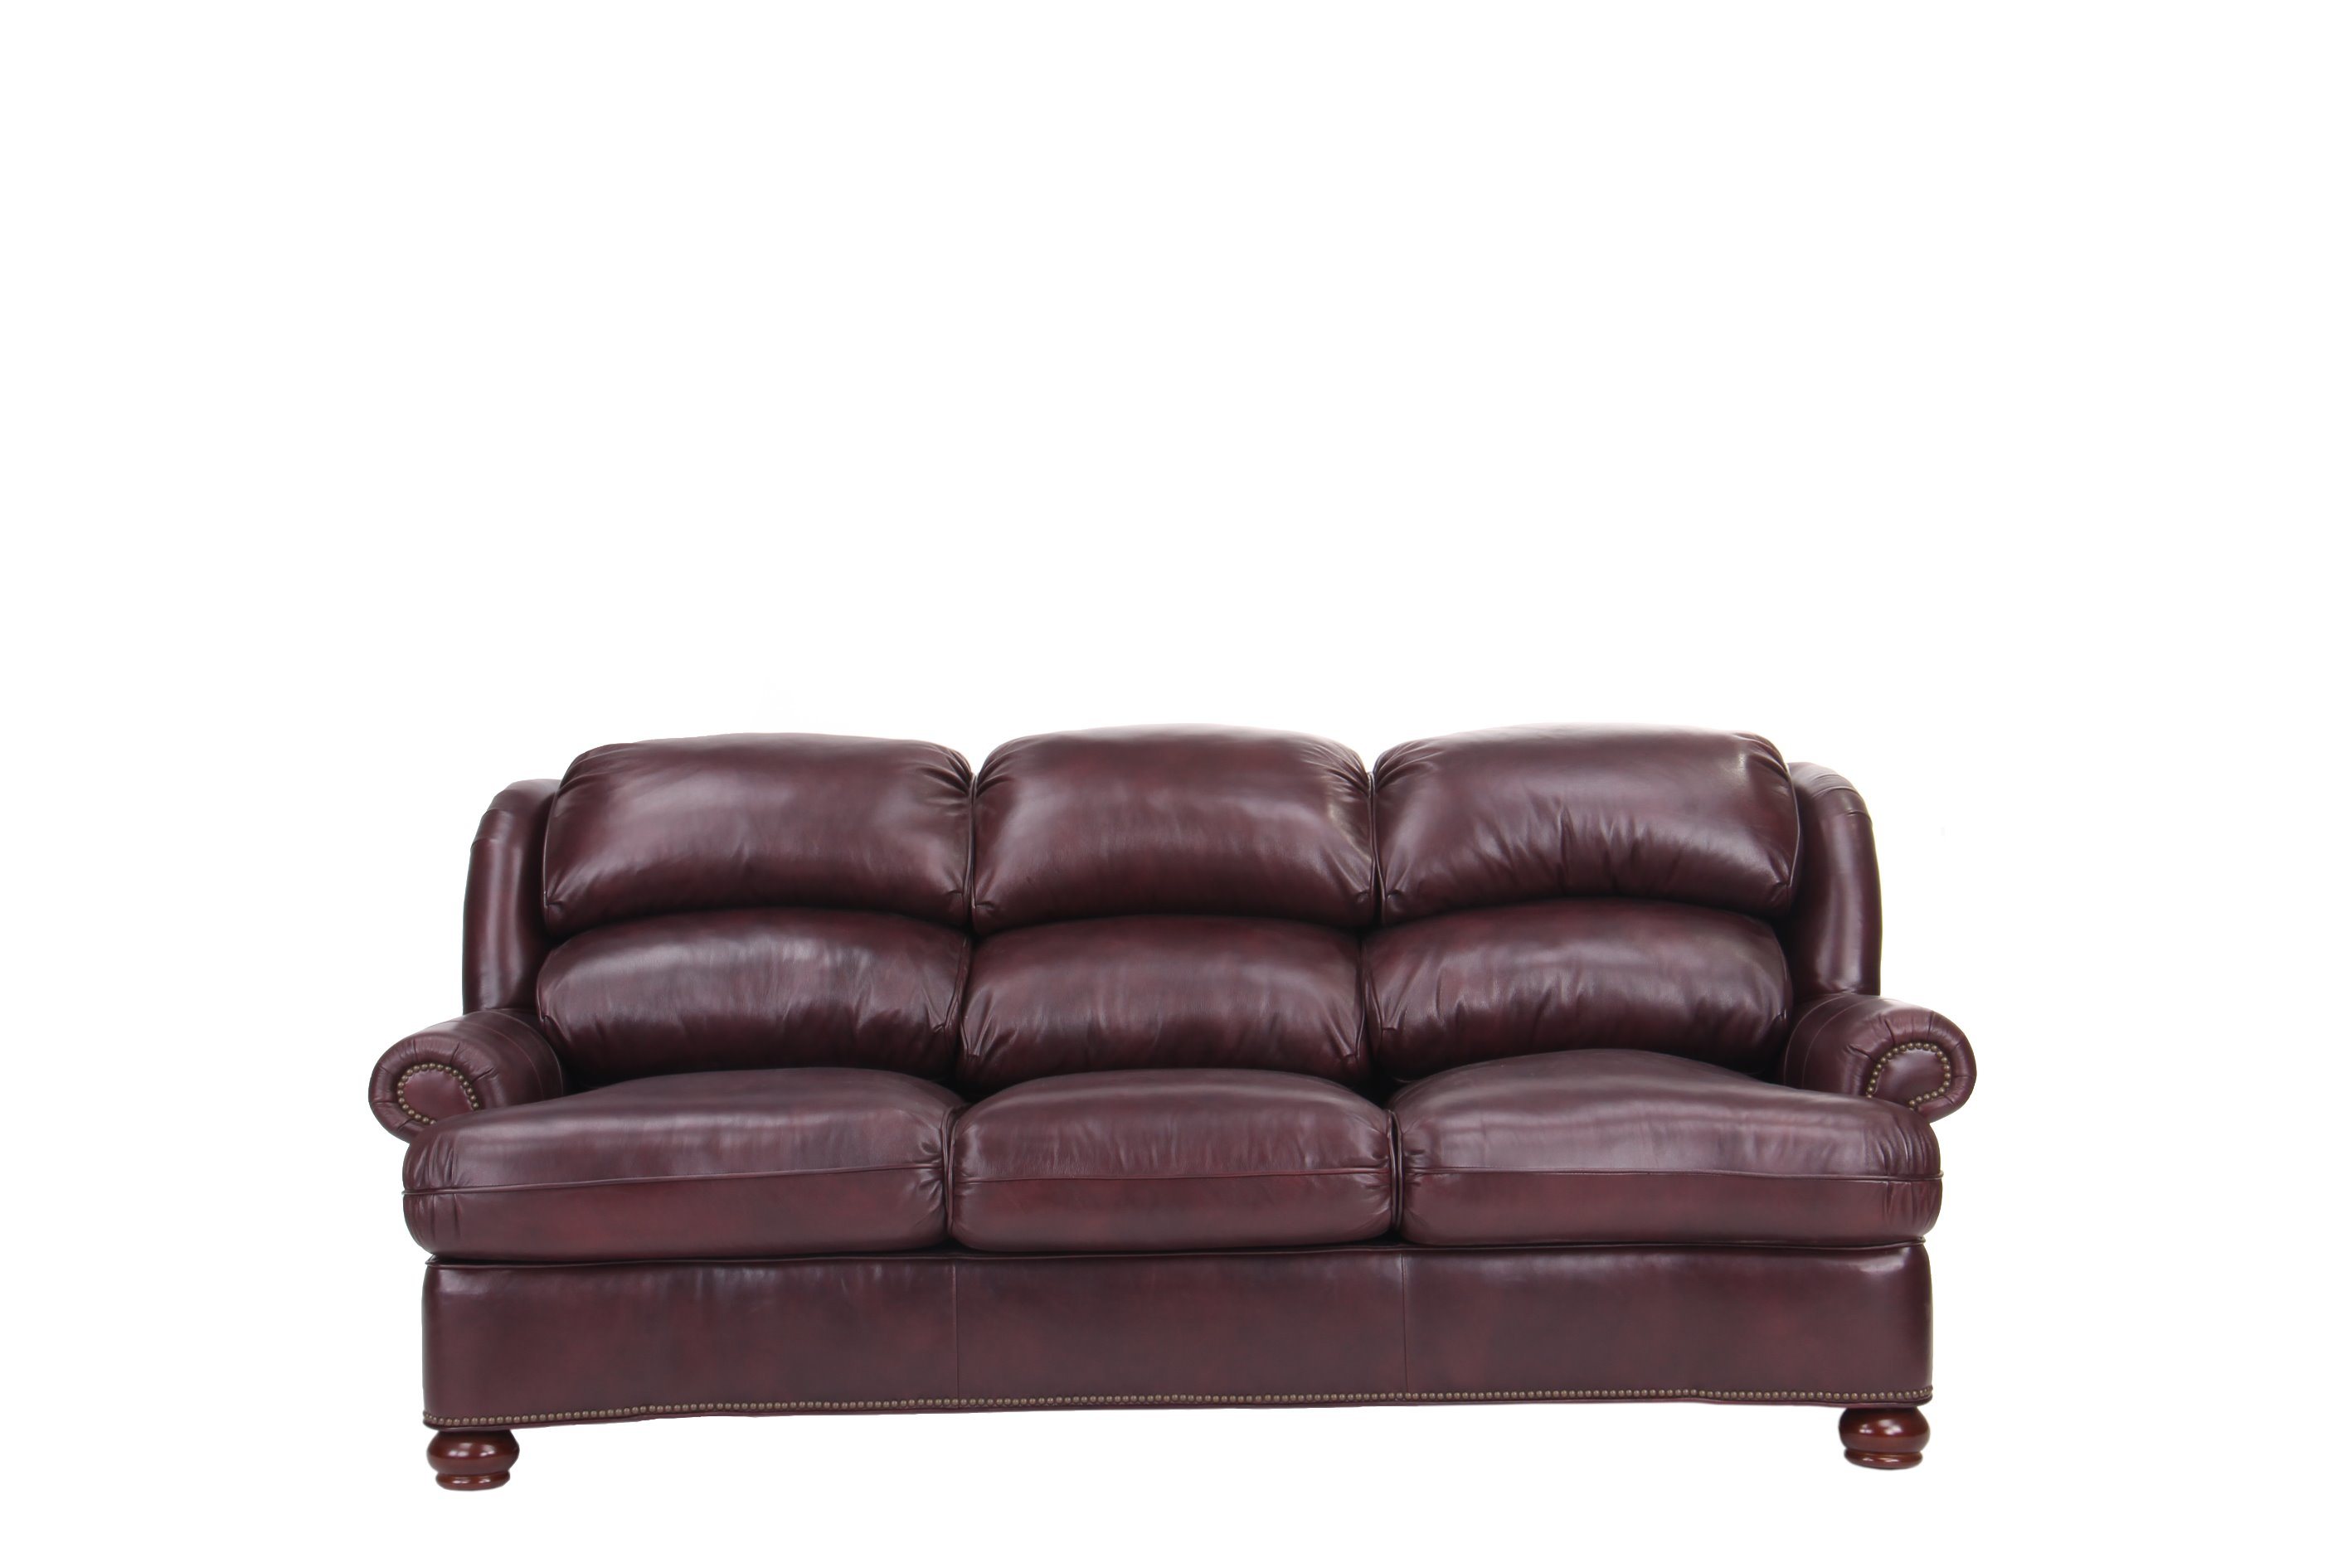 Comfortable Stationary Leather Sofa Setamerican Designed for Living Room